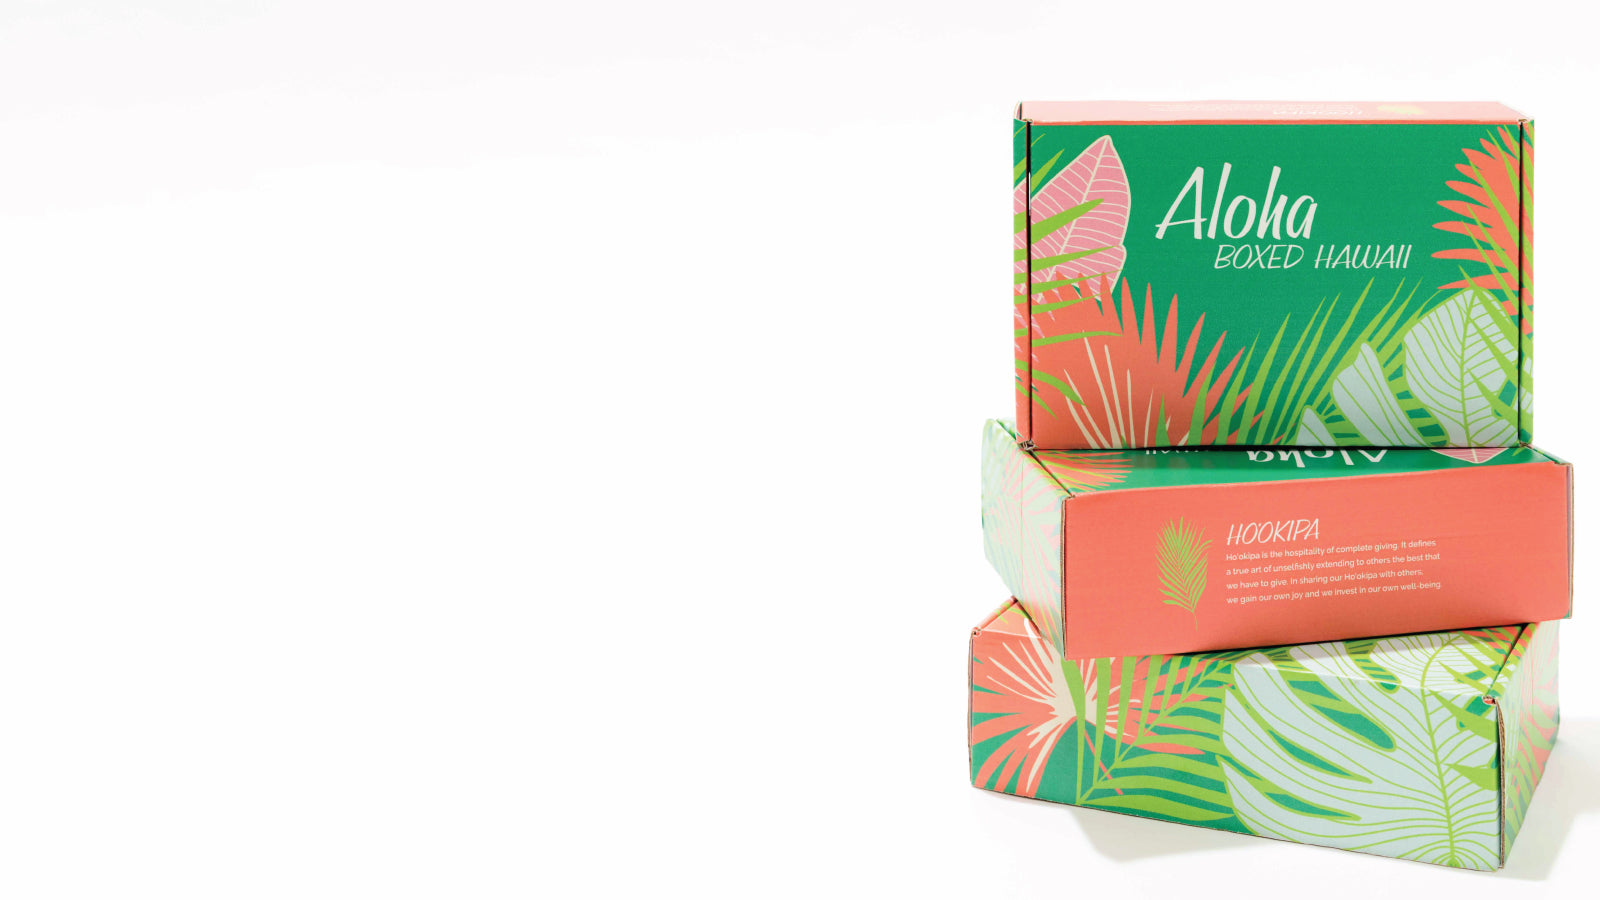 Aloha Boxed boxes stacked